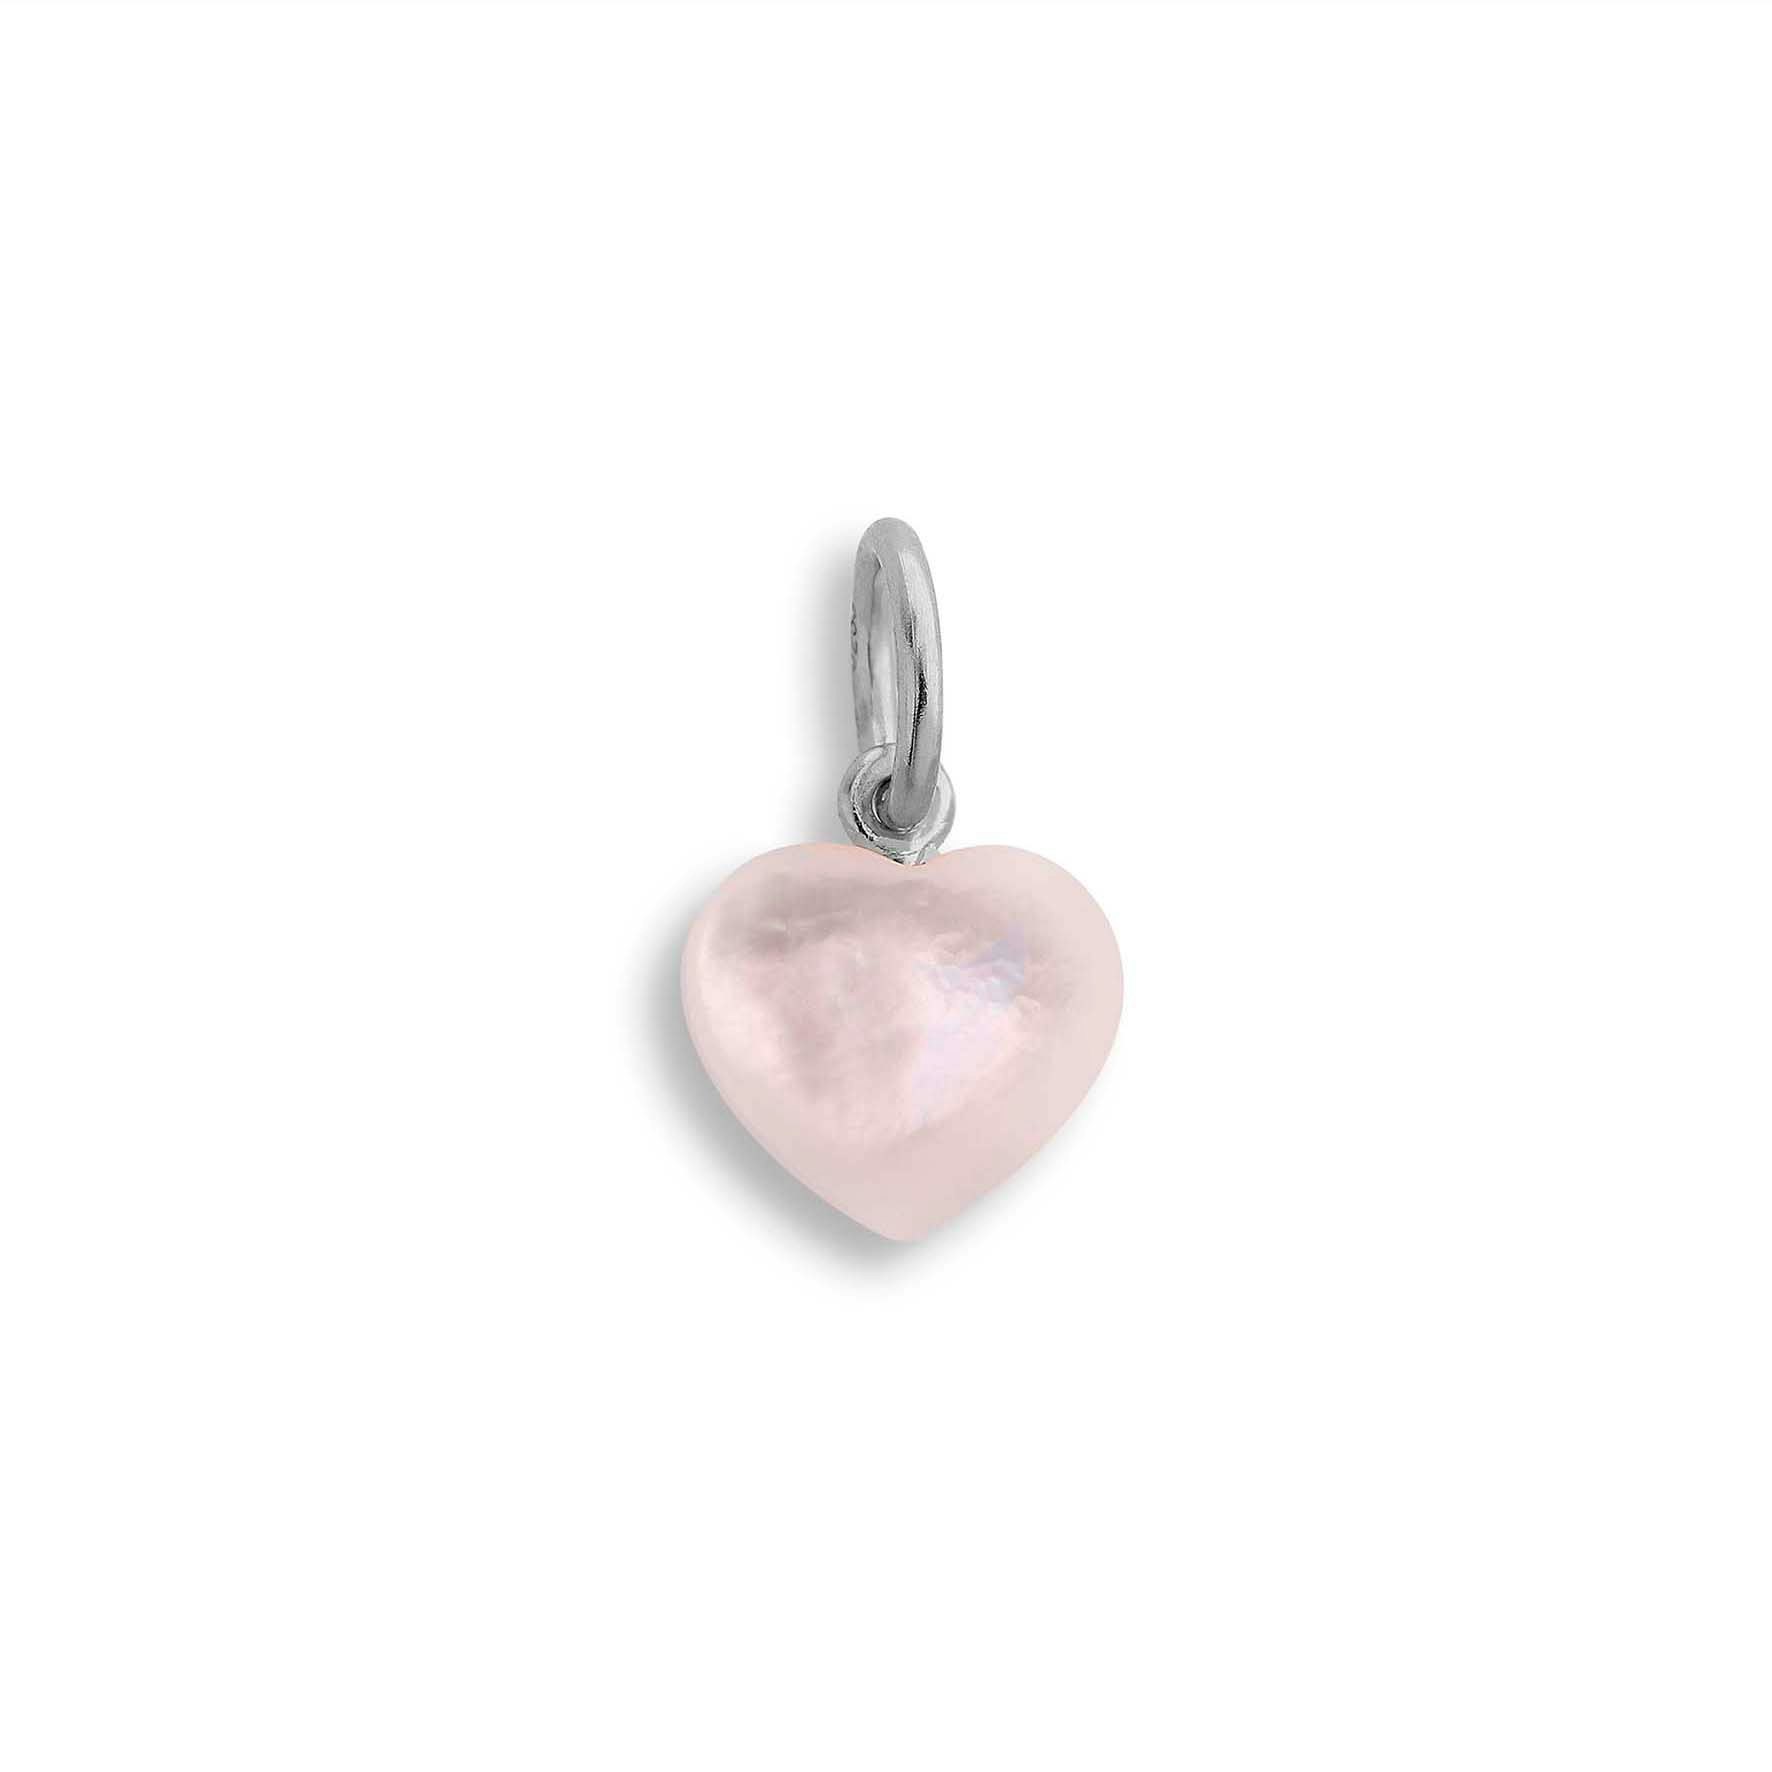 Small Souvenir Heart från Jane Kønig i Silver Sterling 925